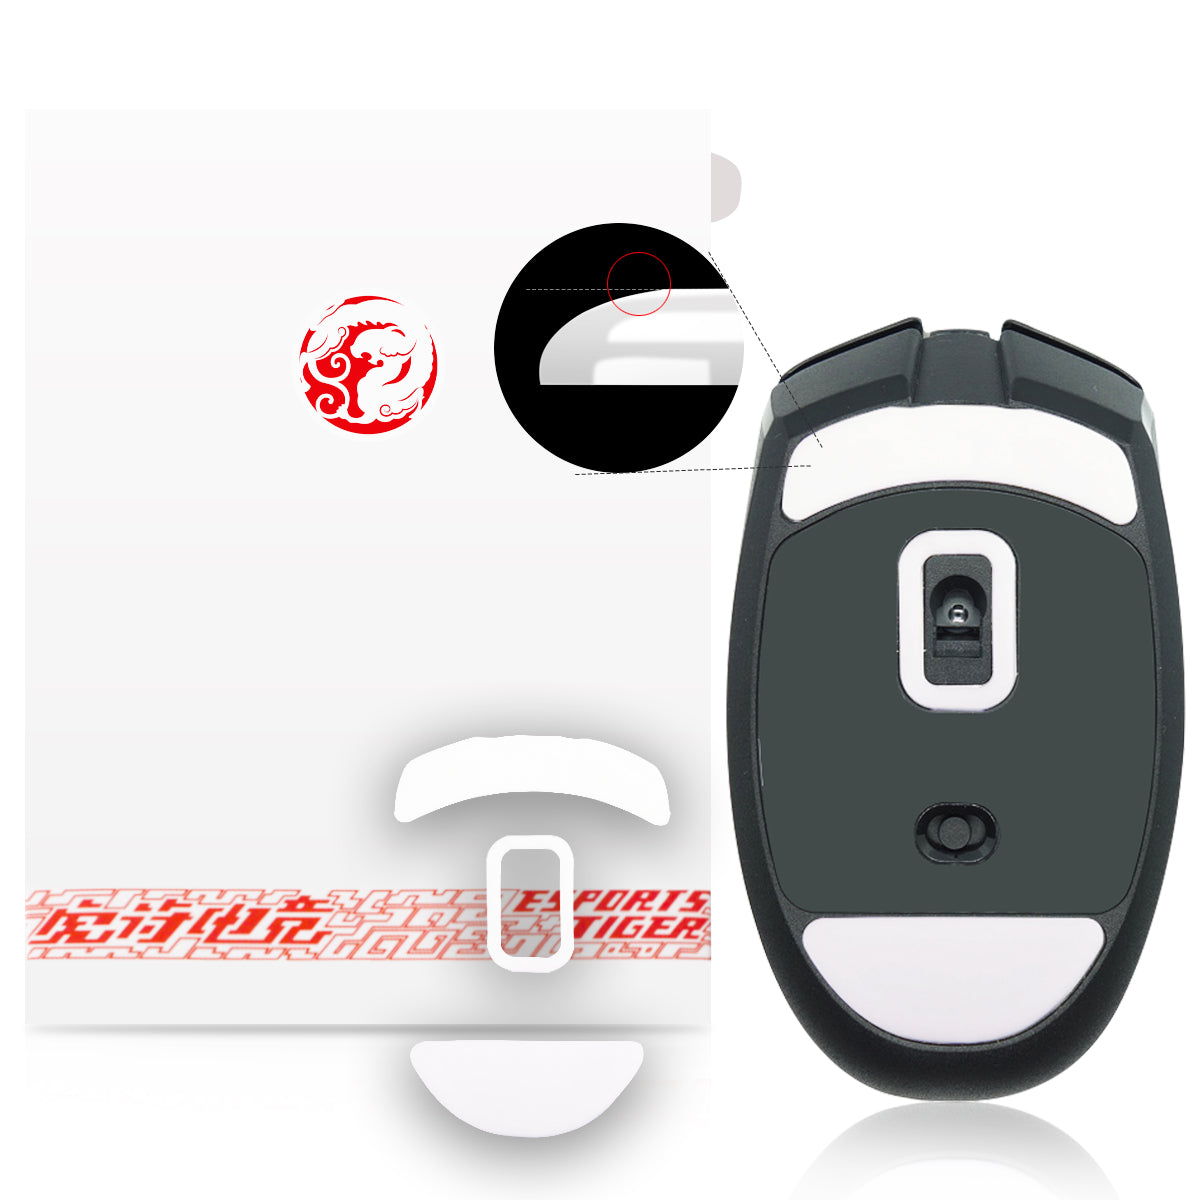 Razer Grip Tape Mouses, Razer Orochi V2 Mouse